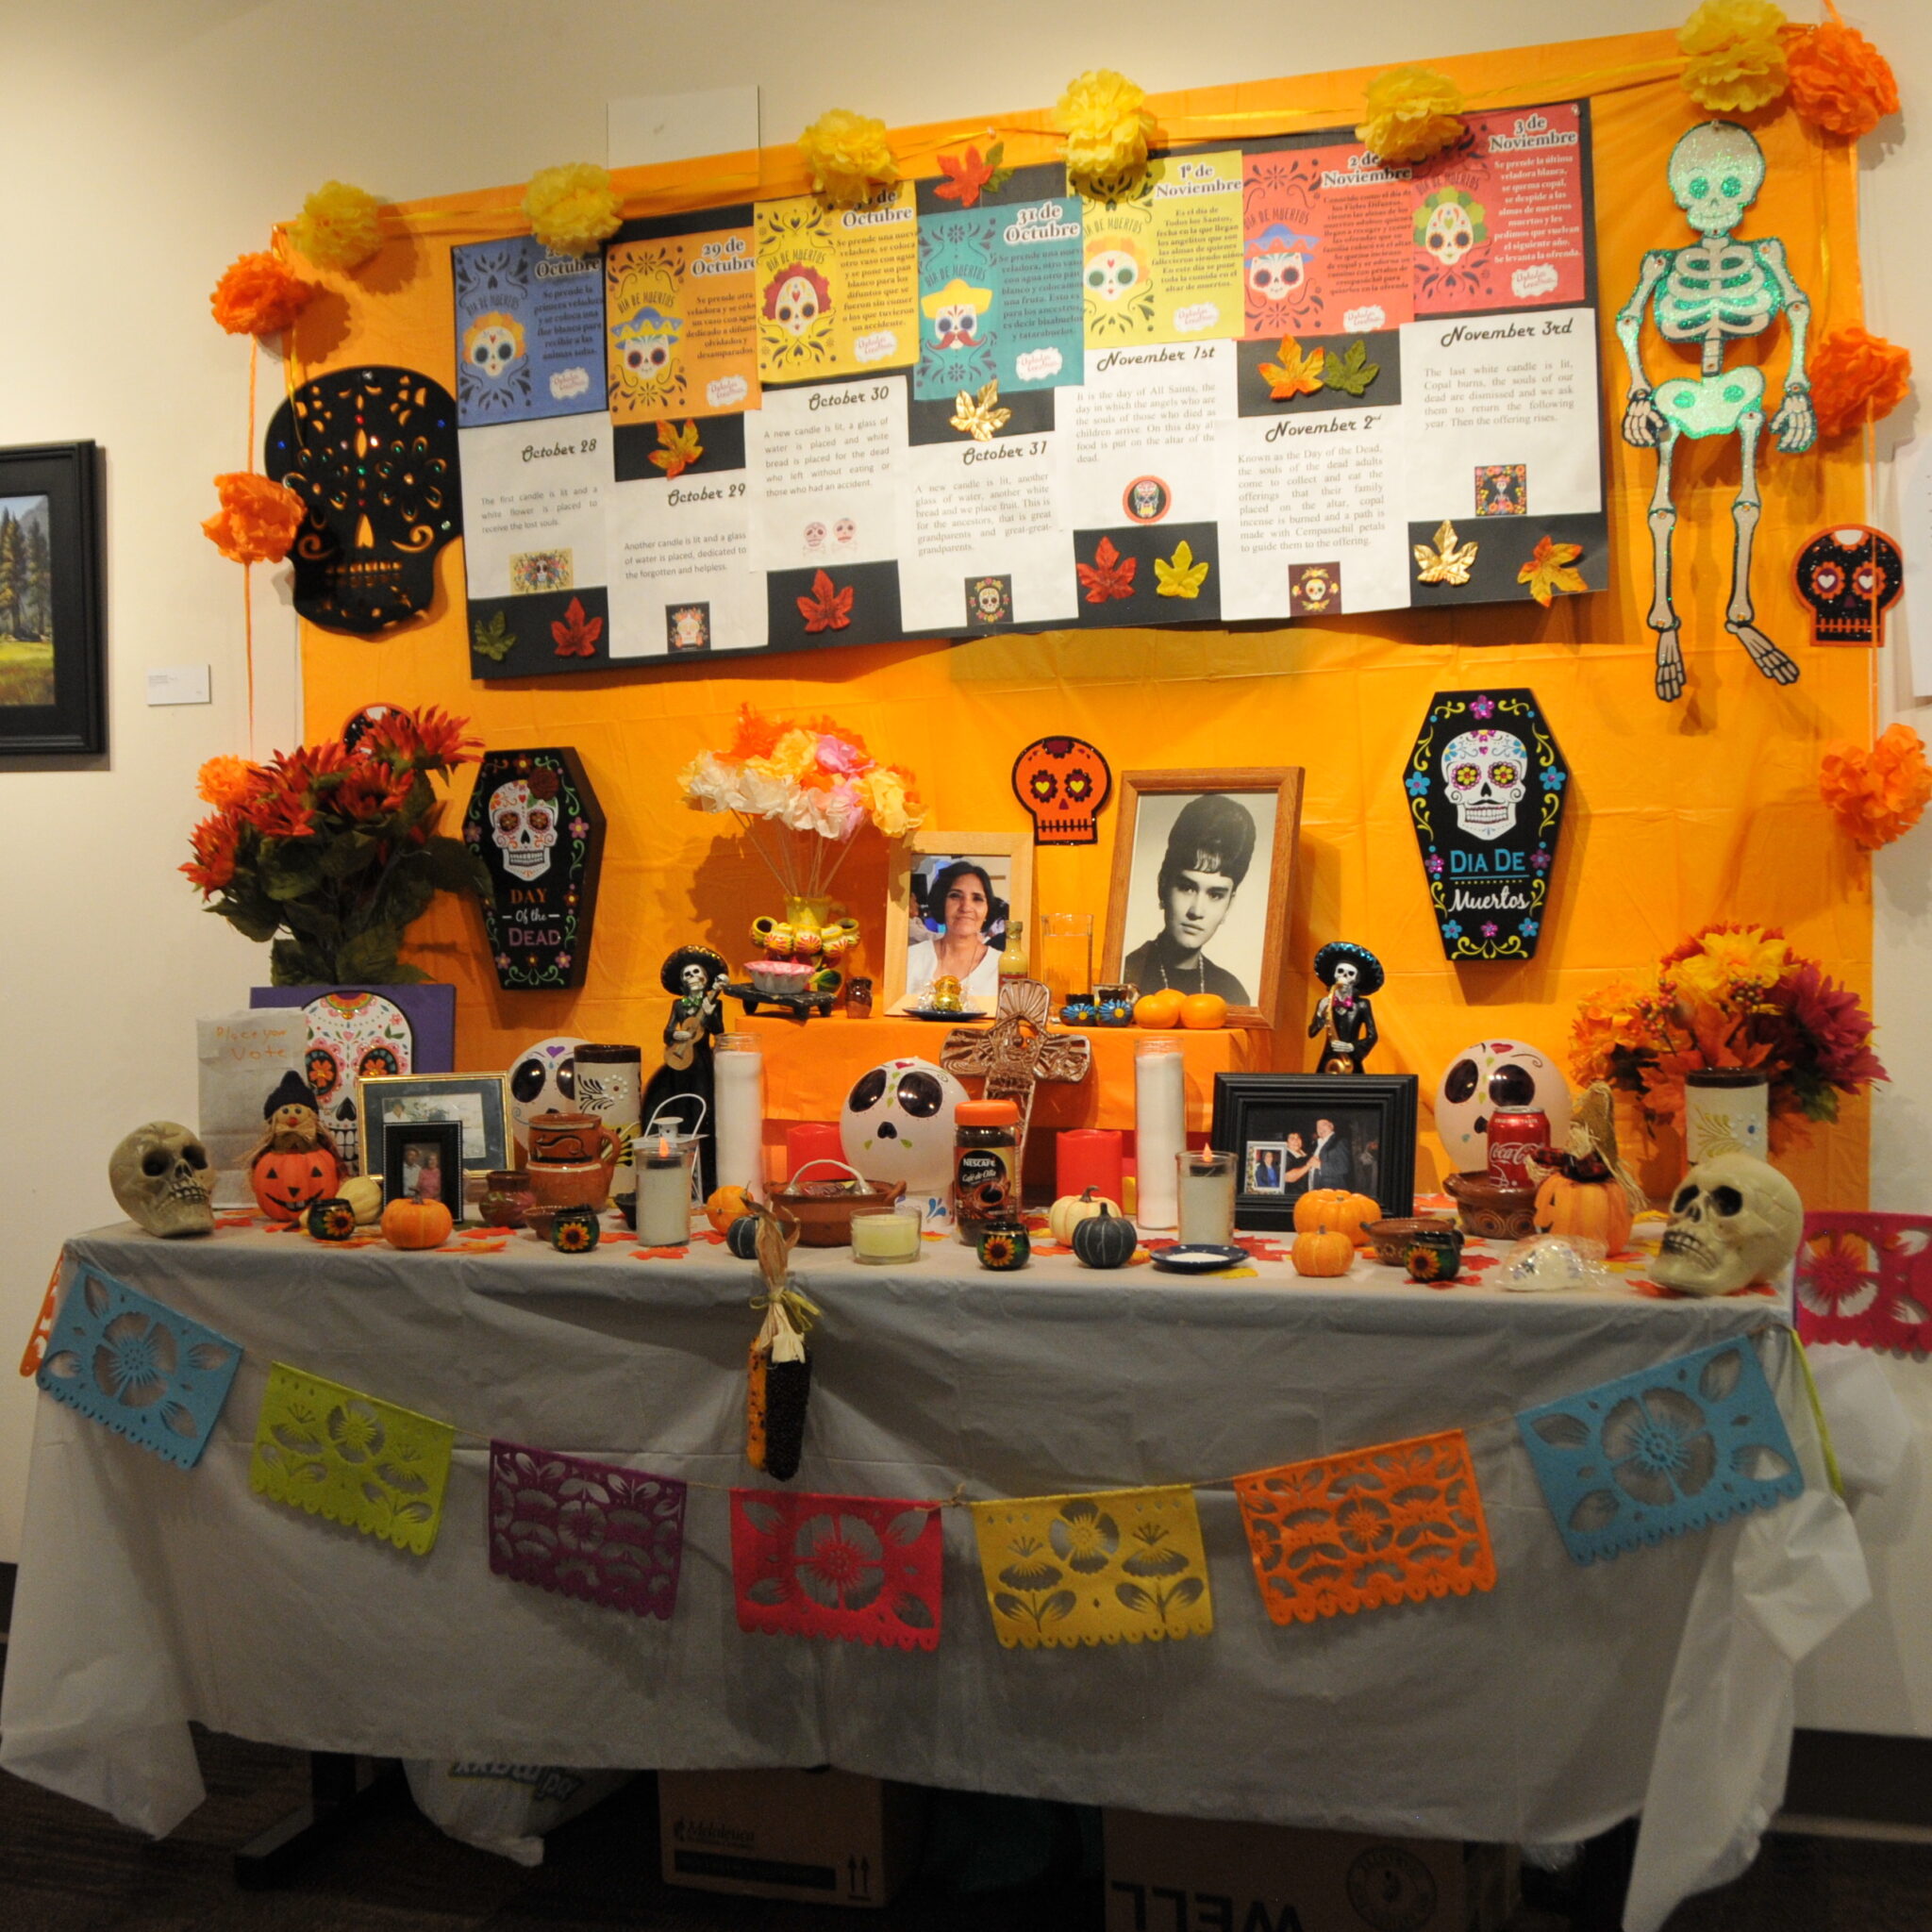 Celebrate Dia de los Muertos on Thursday, Nov. 3